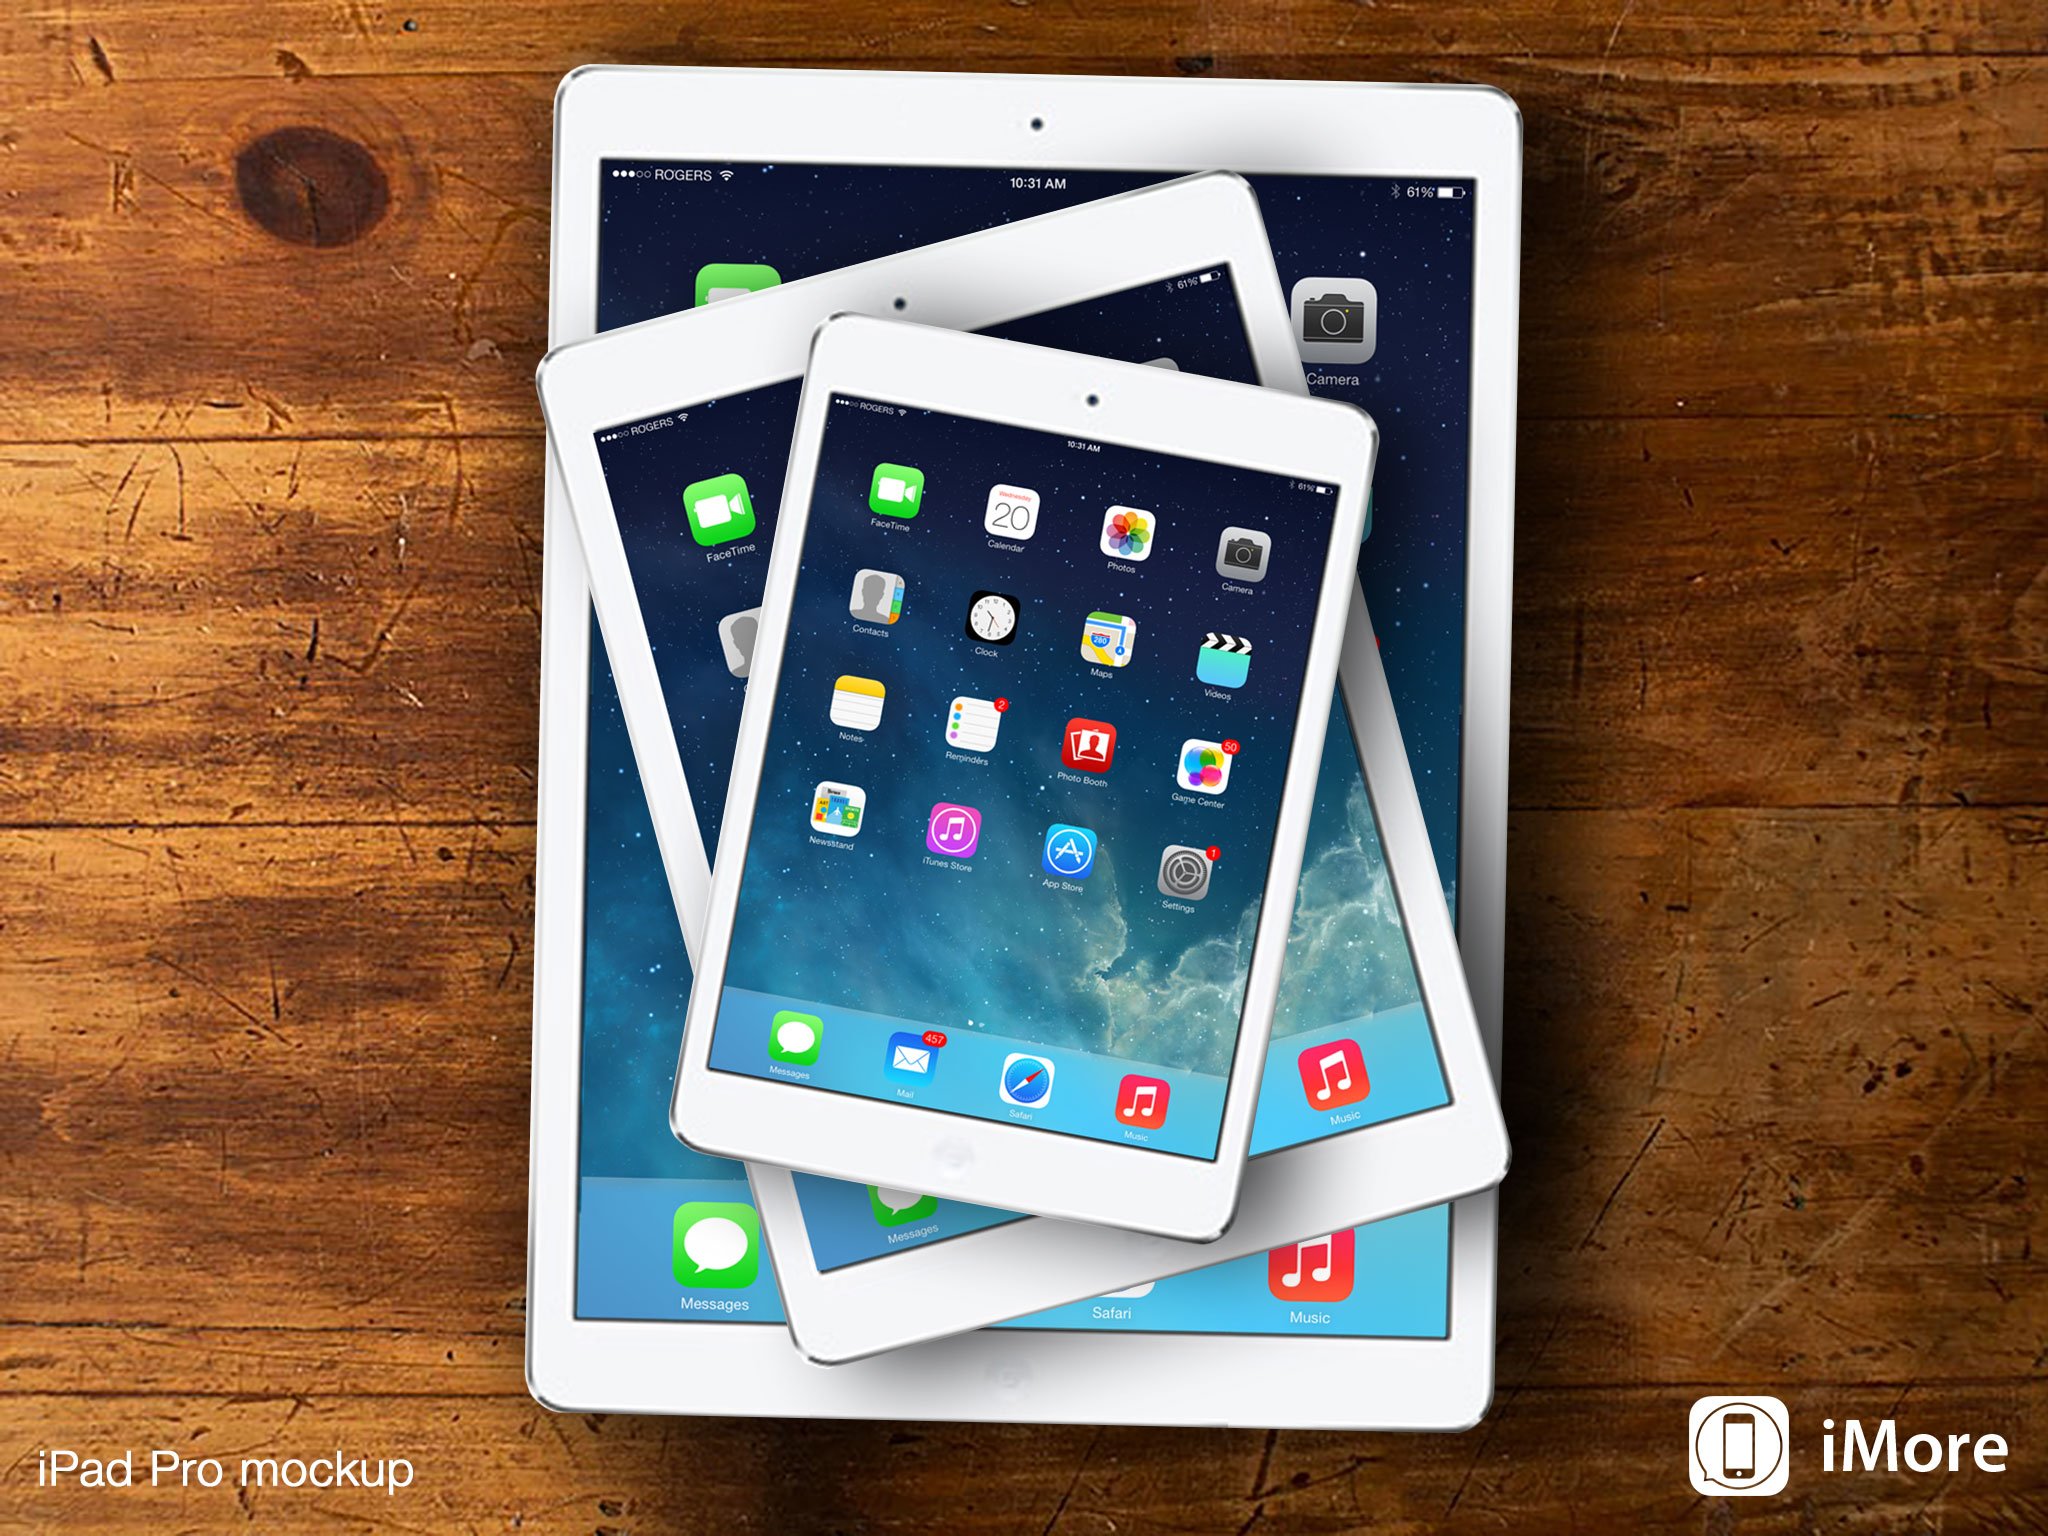 Imagining a 13-inch iPad Pro